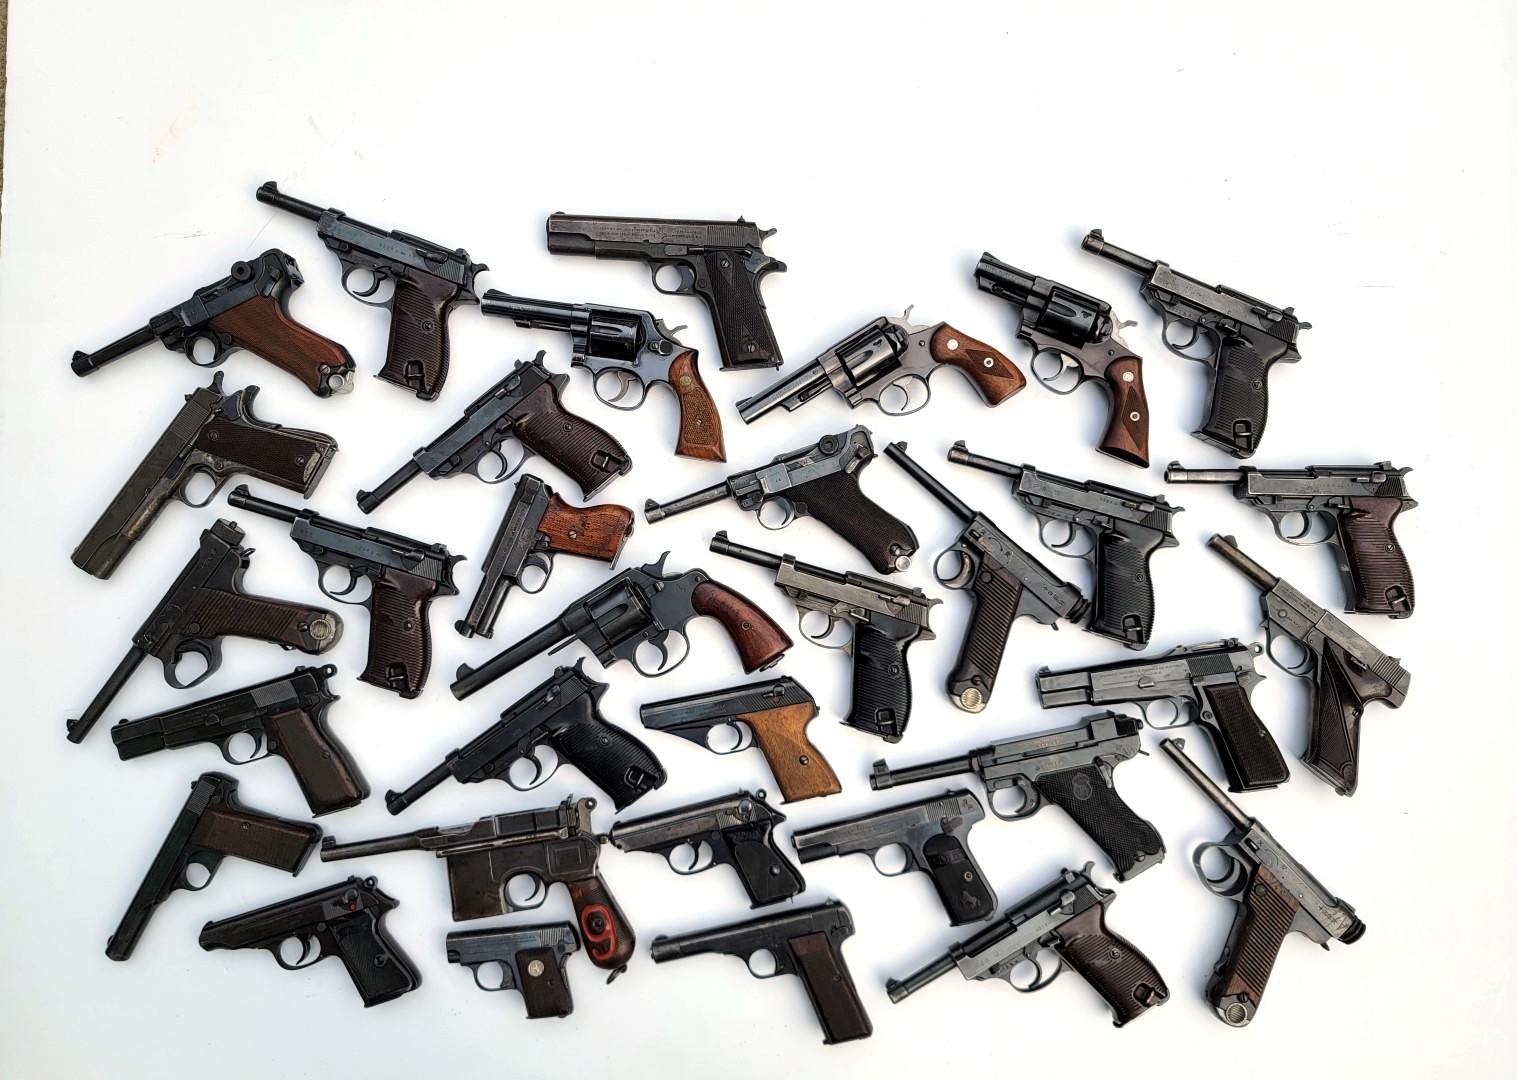 Military Handgun Collection